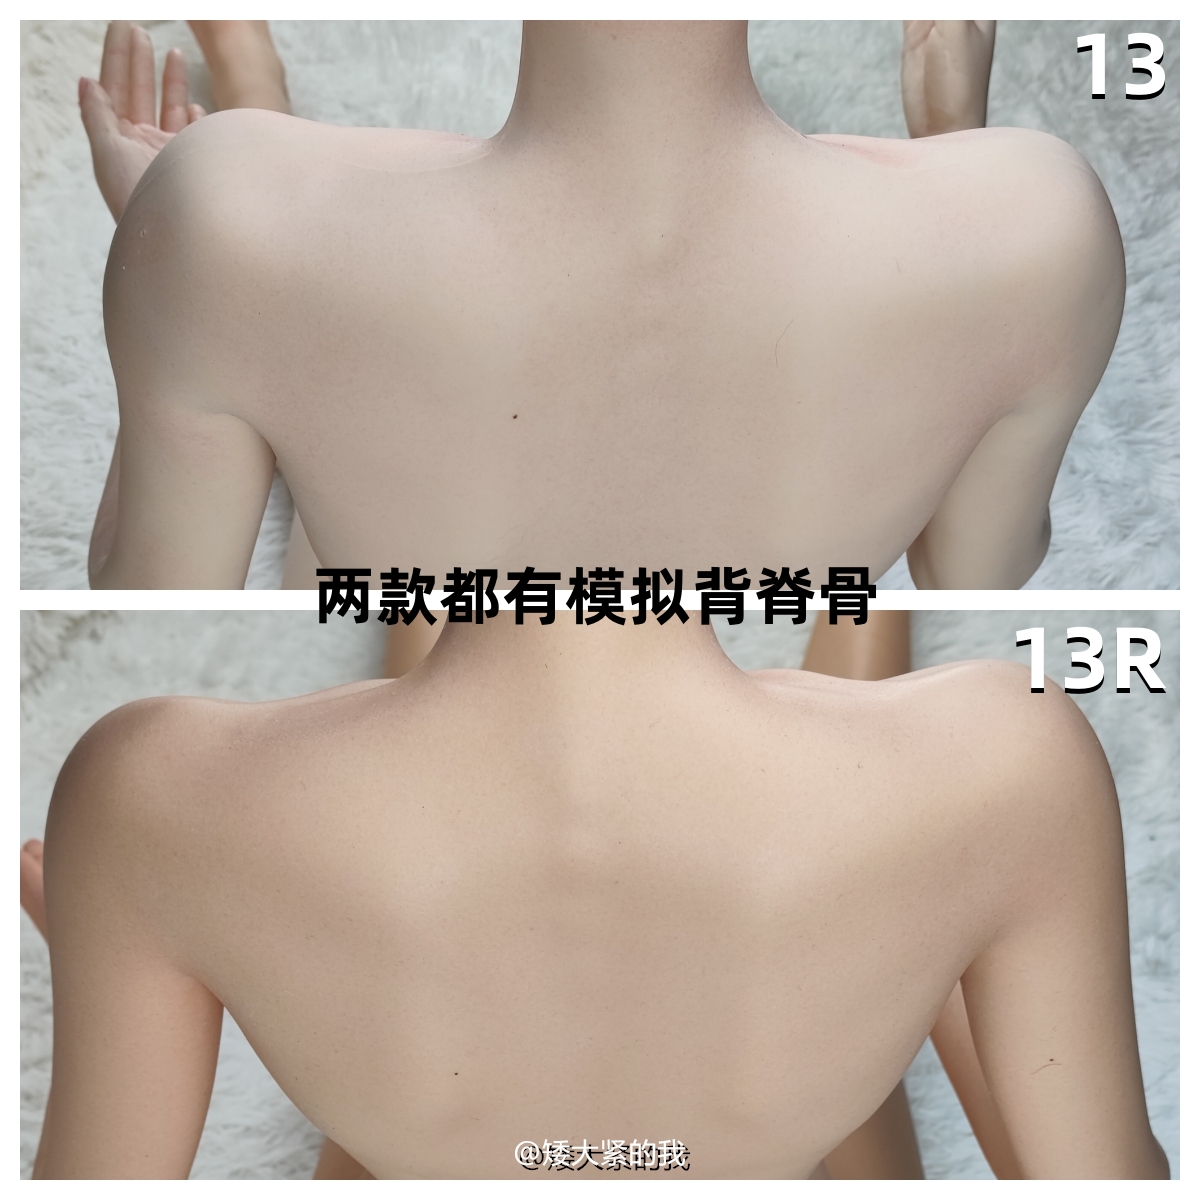 Gynoid Doll RZR|Realistic Silicone Sex Doll|Light Shooting|Head Sculpture|Head Carving|Back Across|Lisa|Lori|13R|Doll Skin|Back Shape|Nipple